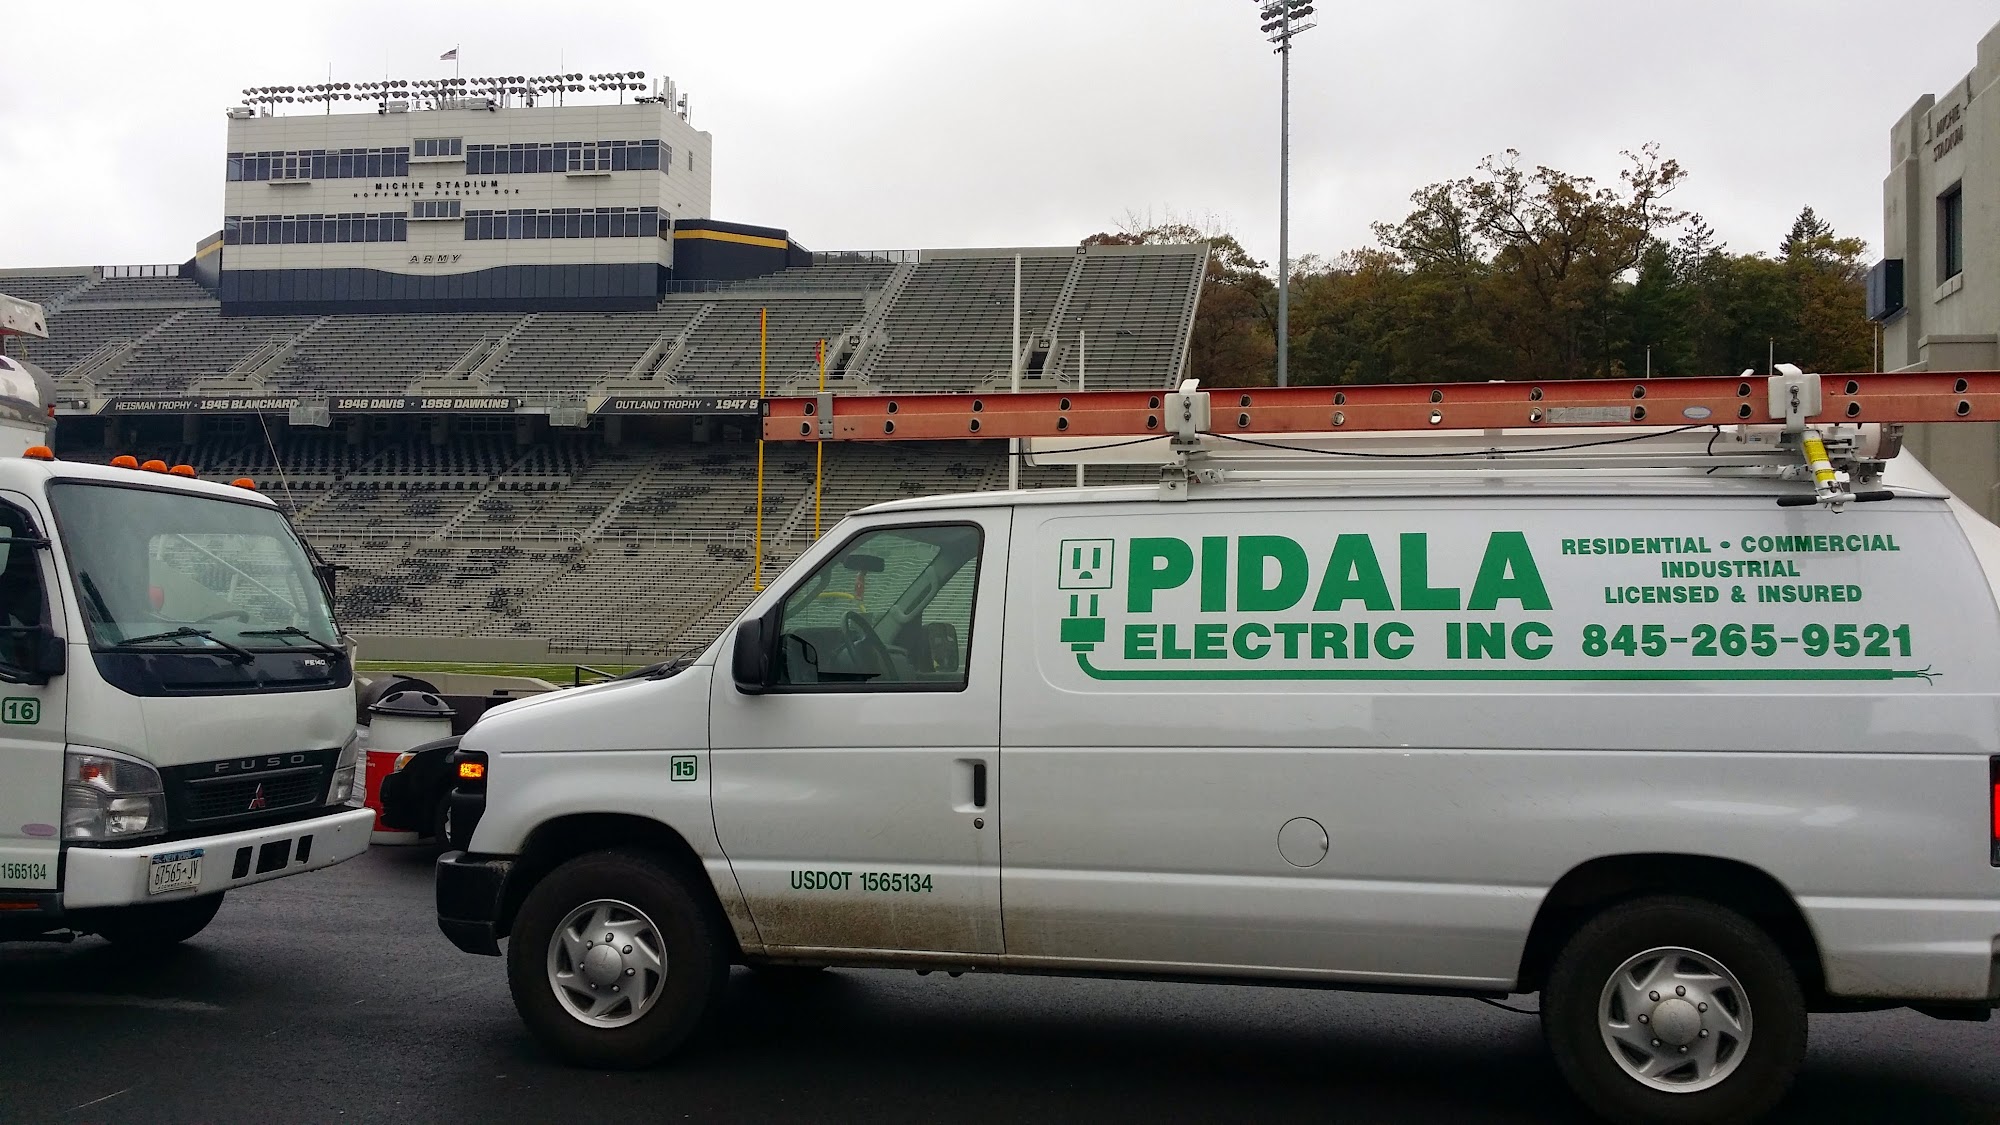 Pidala Electric Corporation